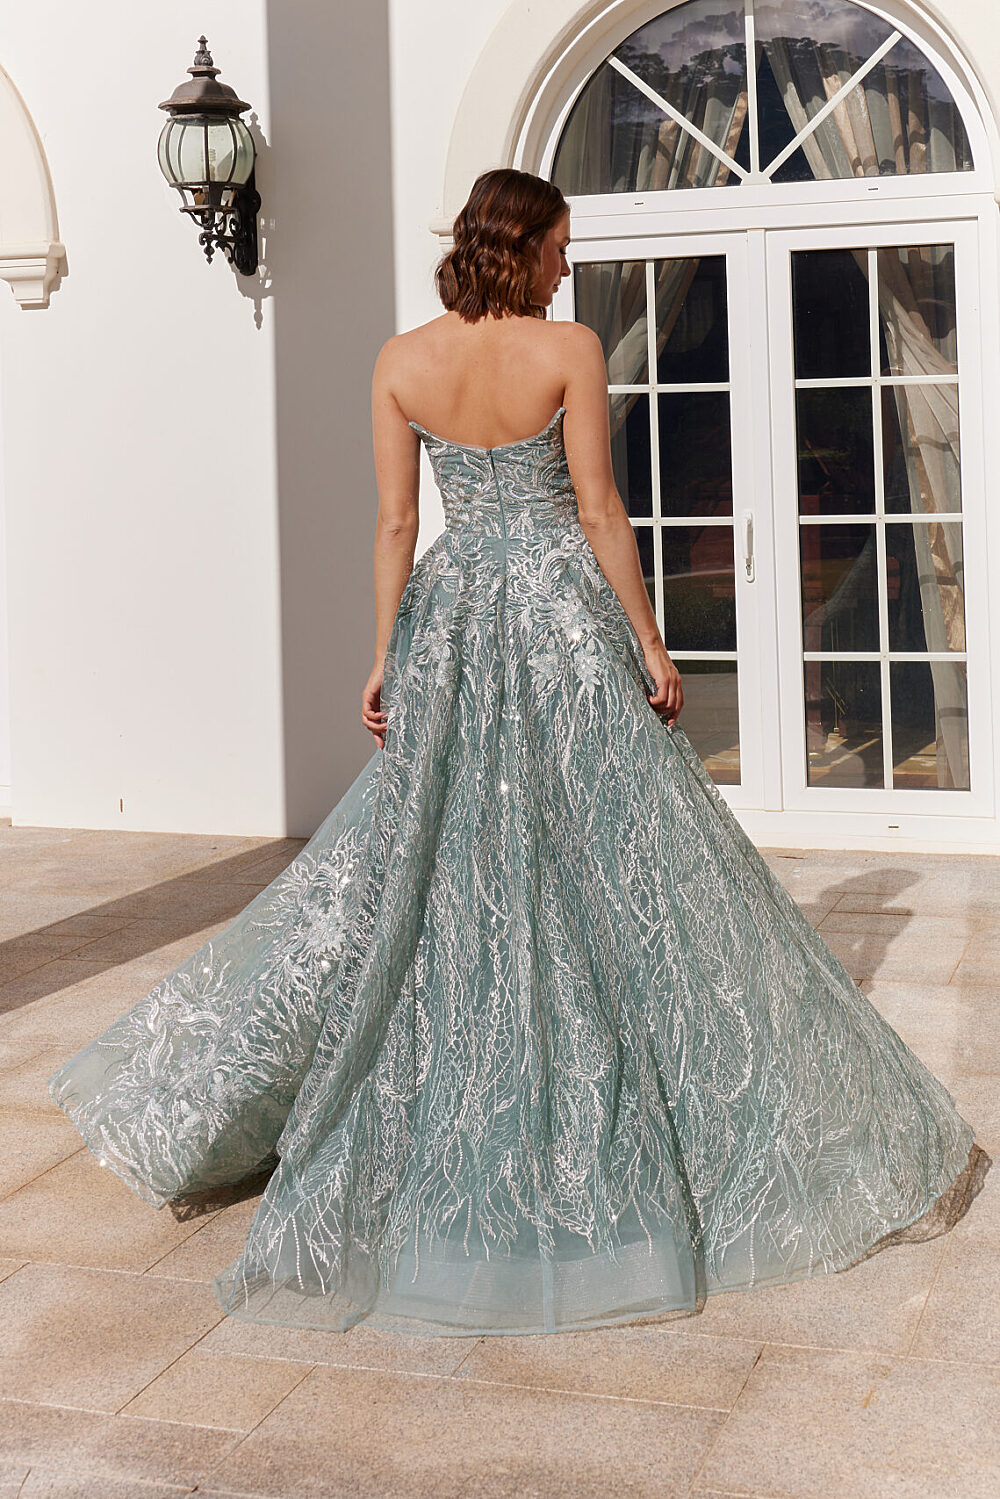 Jemima PO976 Evening & Formal dress by Tania Olsen Designs